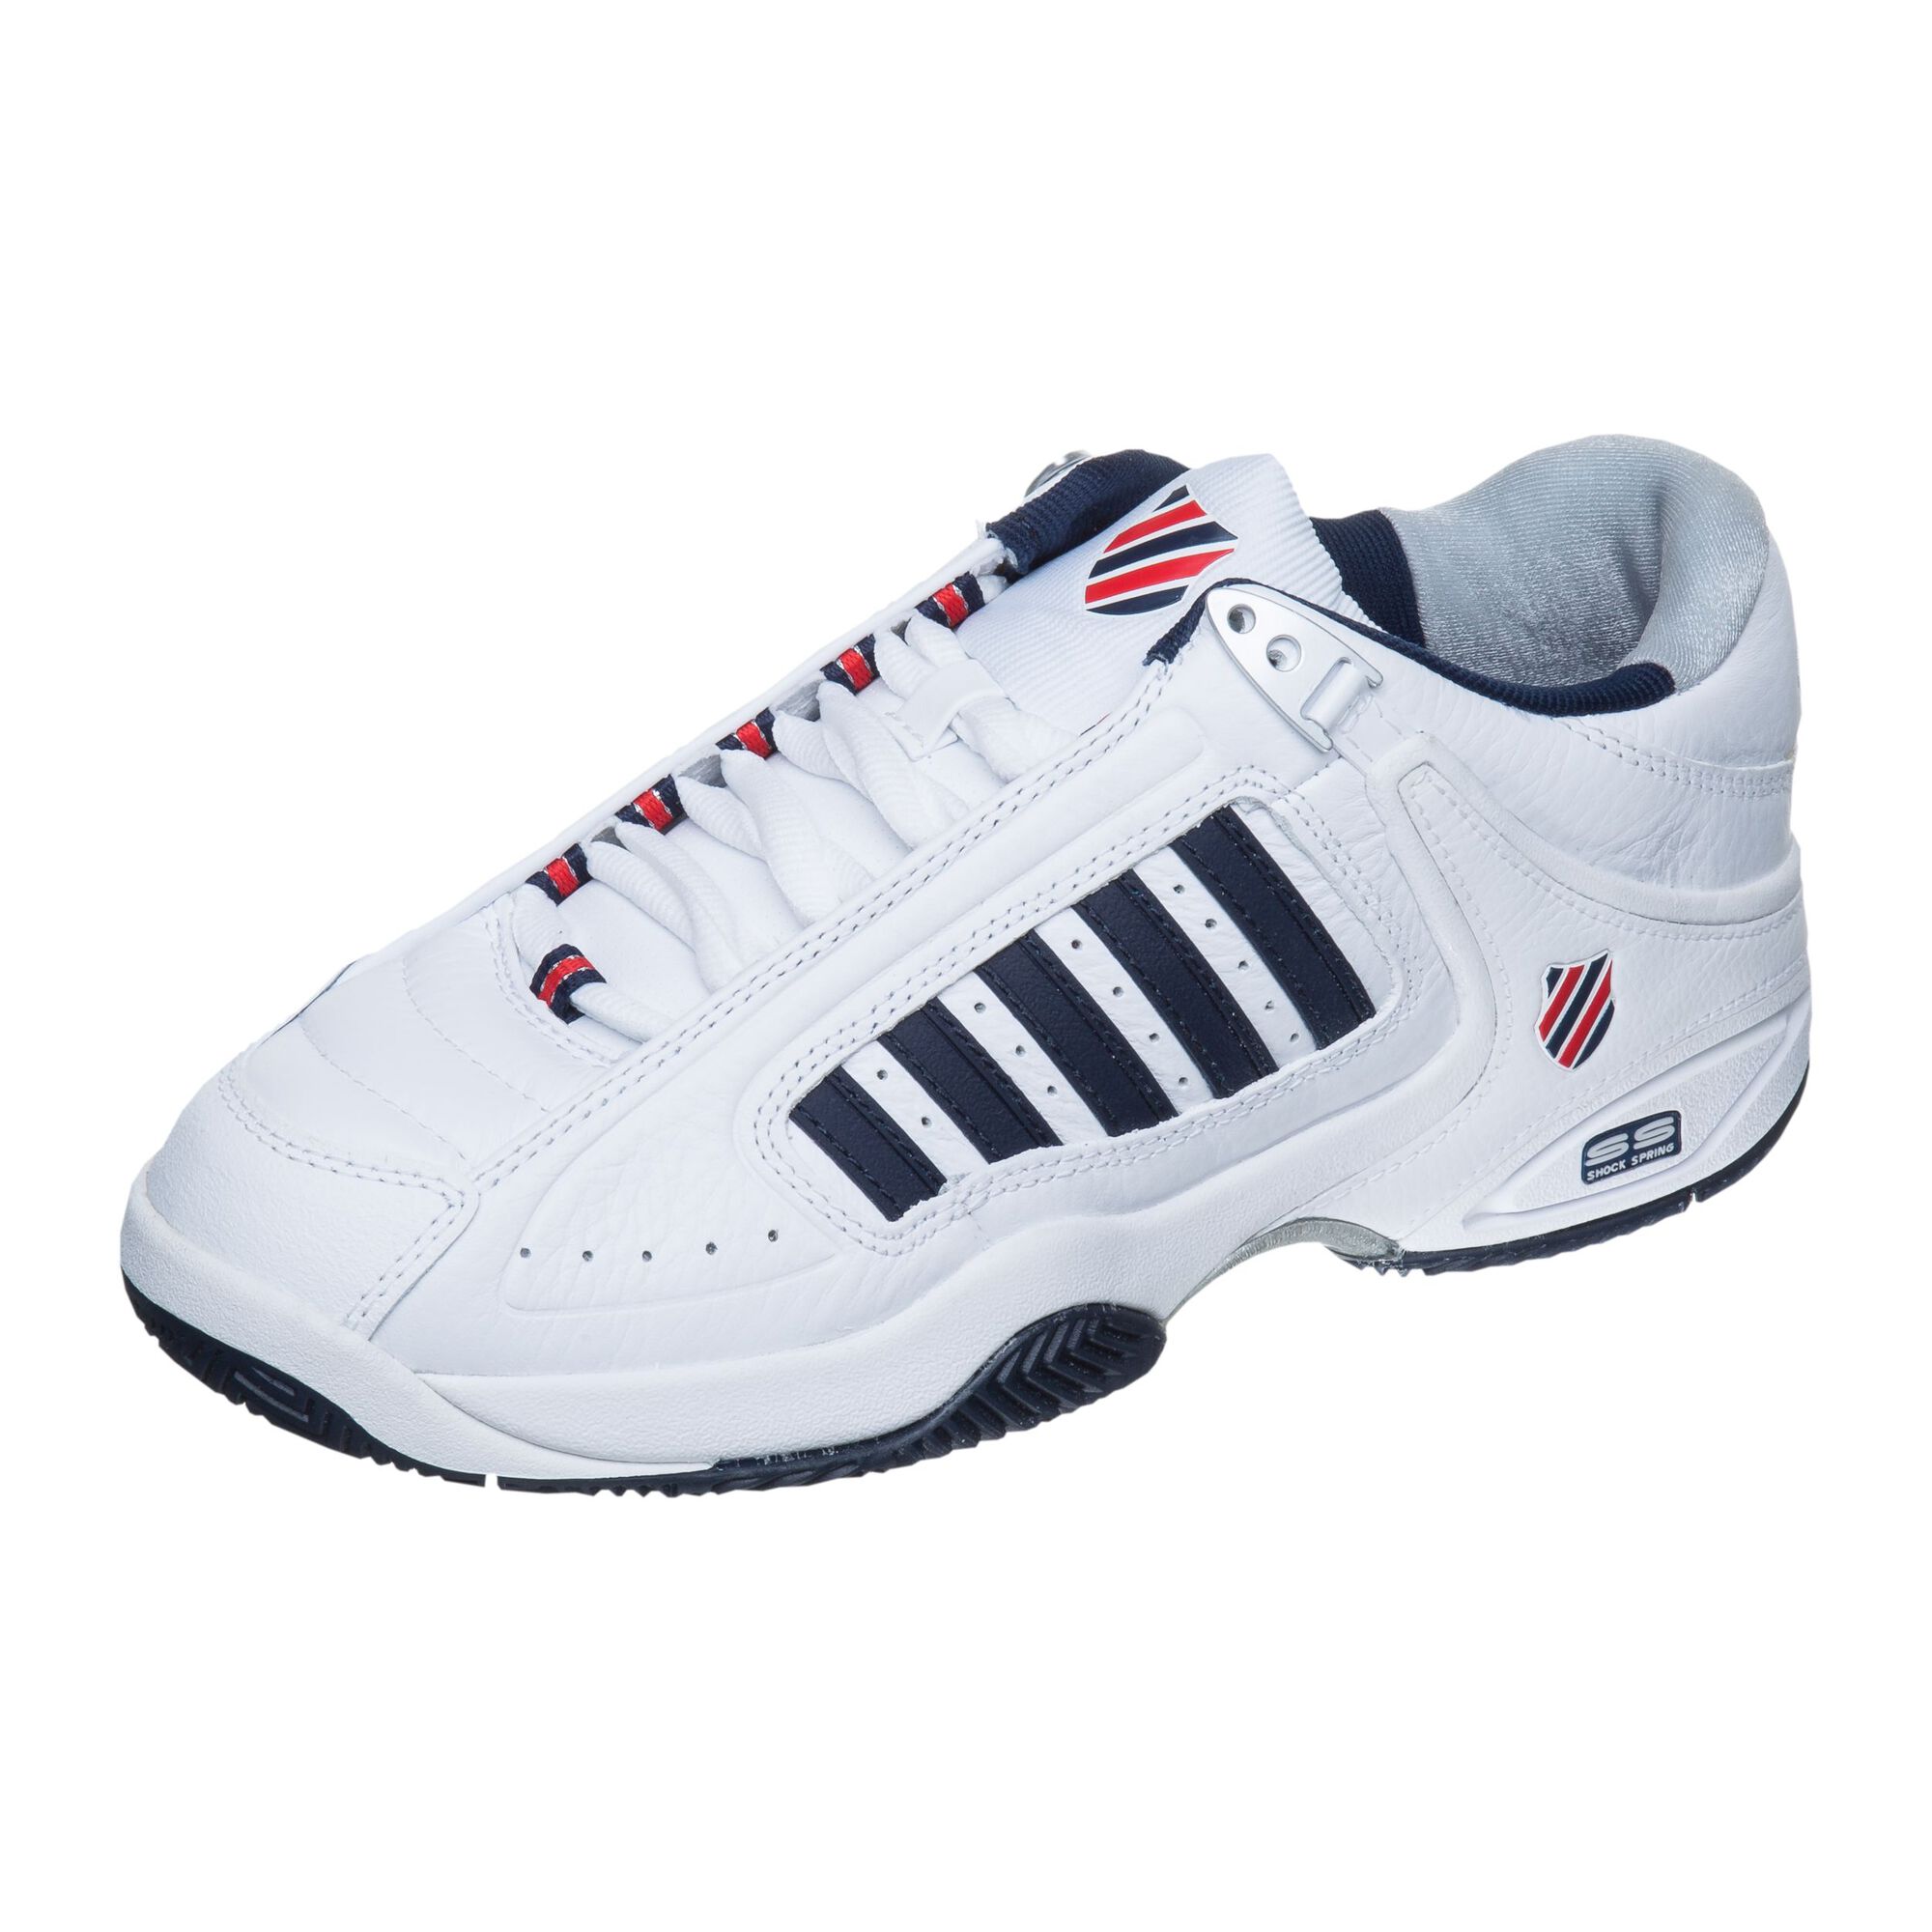 Verlammen vrouwelijk Aanbevolen buy K-Swiss Defier RS All Court Shoe Men - White, Blue online | Tennis-Point